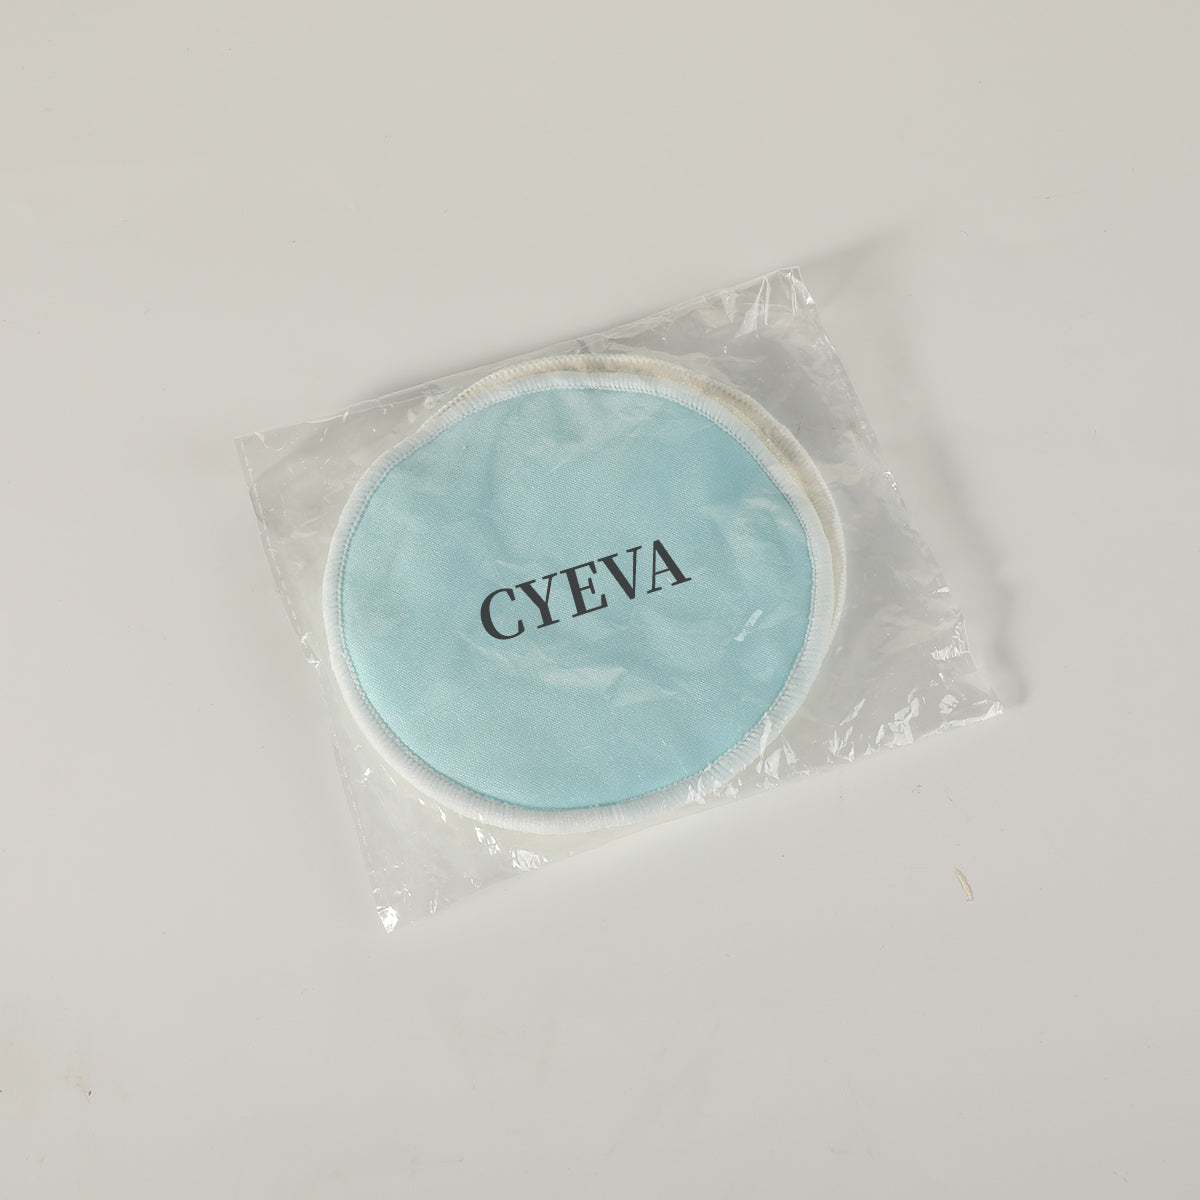 CYEVA Breast-nursing pads, Disposable Breast Pads for Breastfeeding